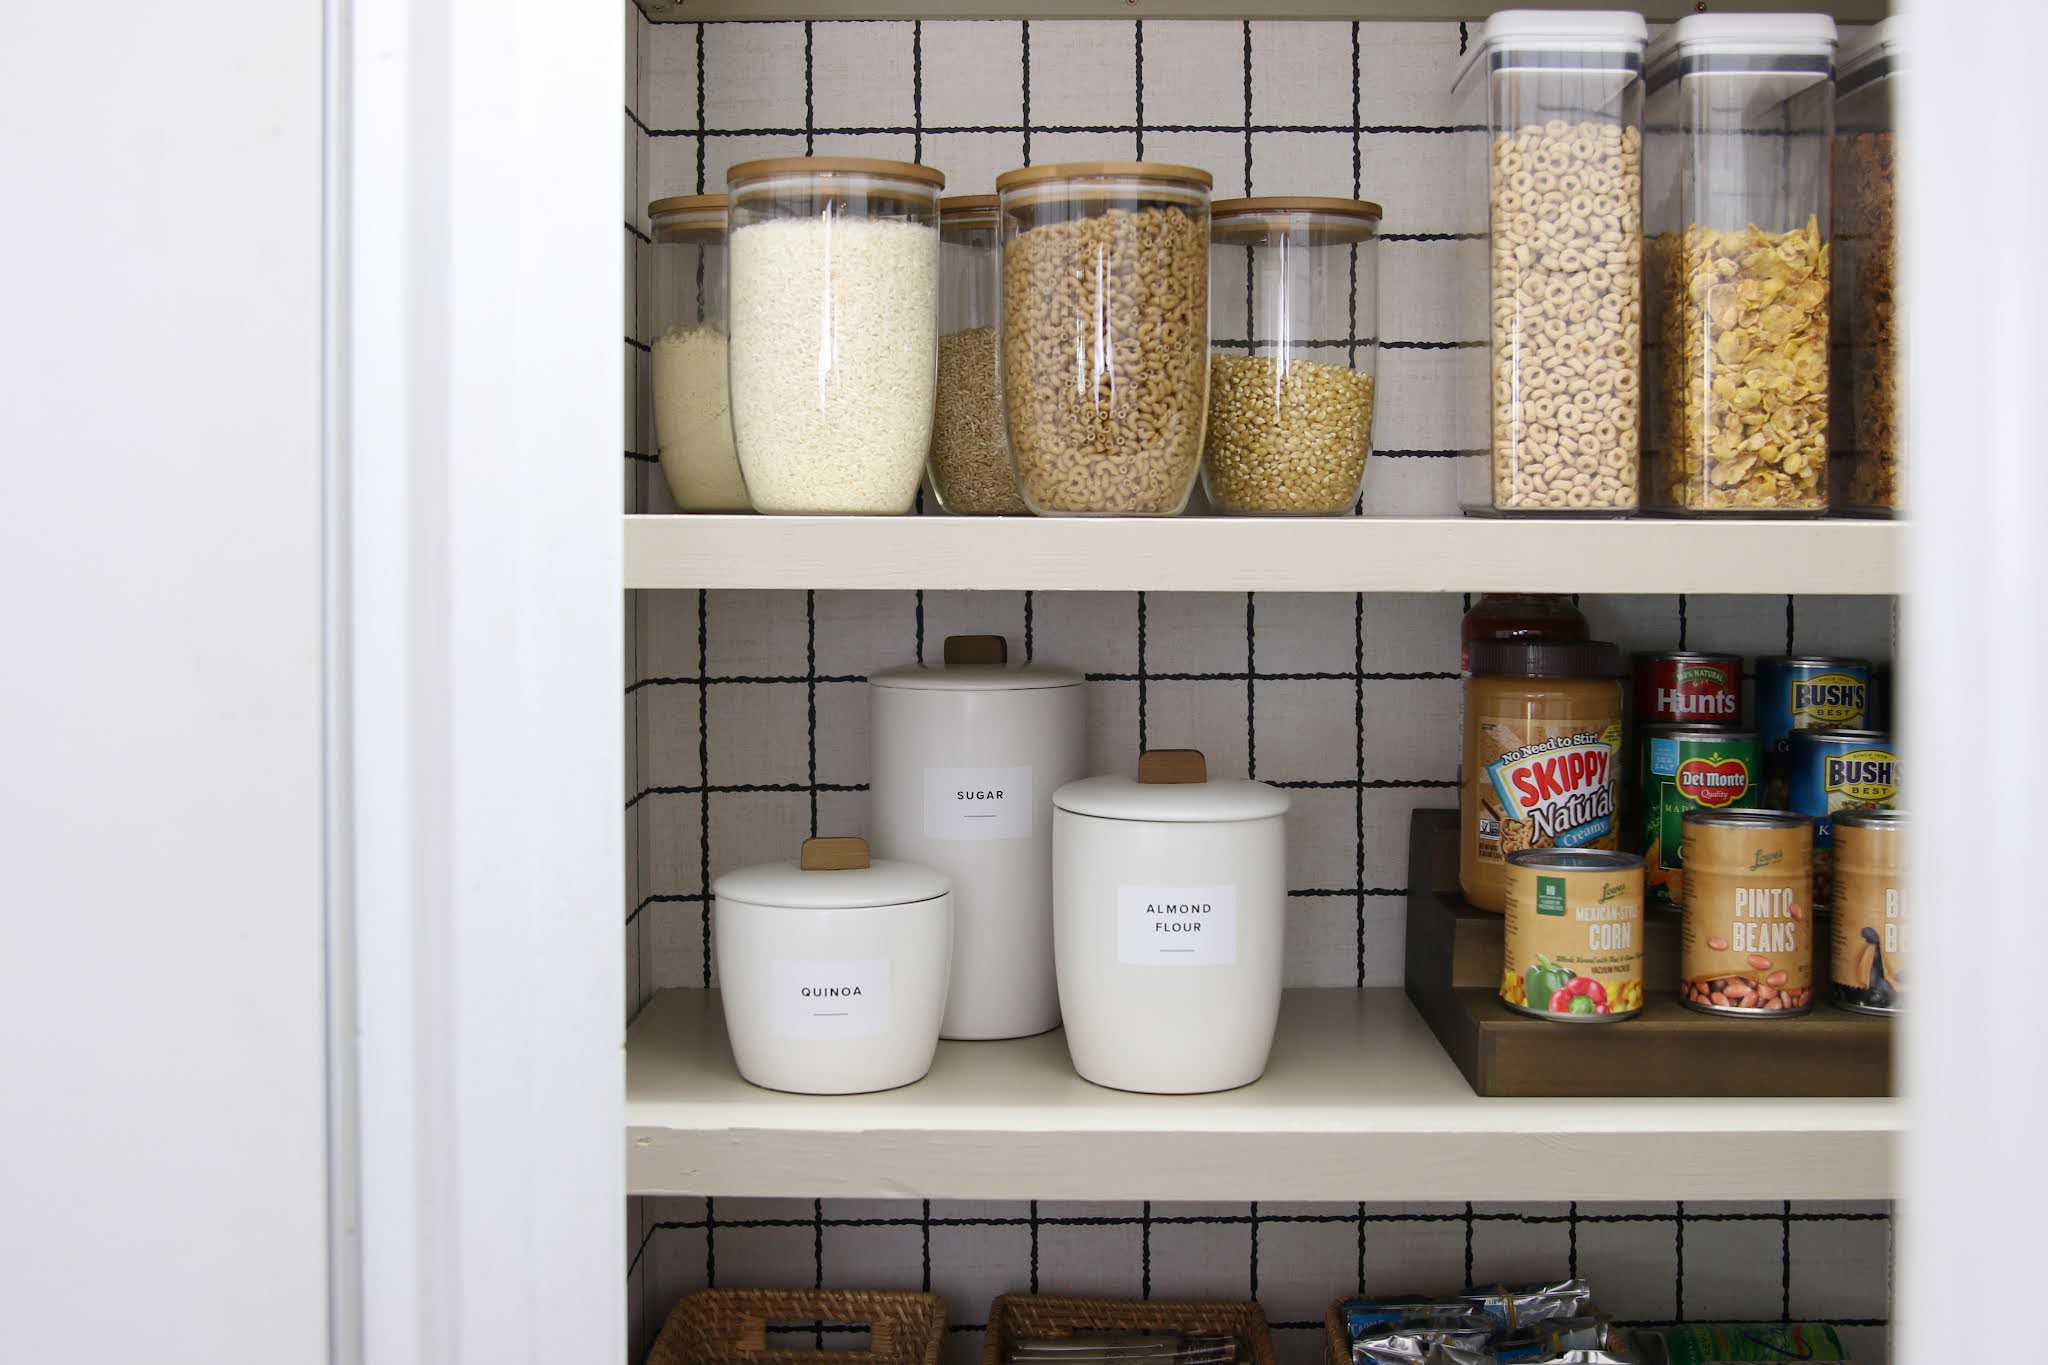 How to Build Corner Pantry Shelves - Angela Marie Made